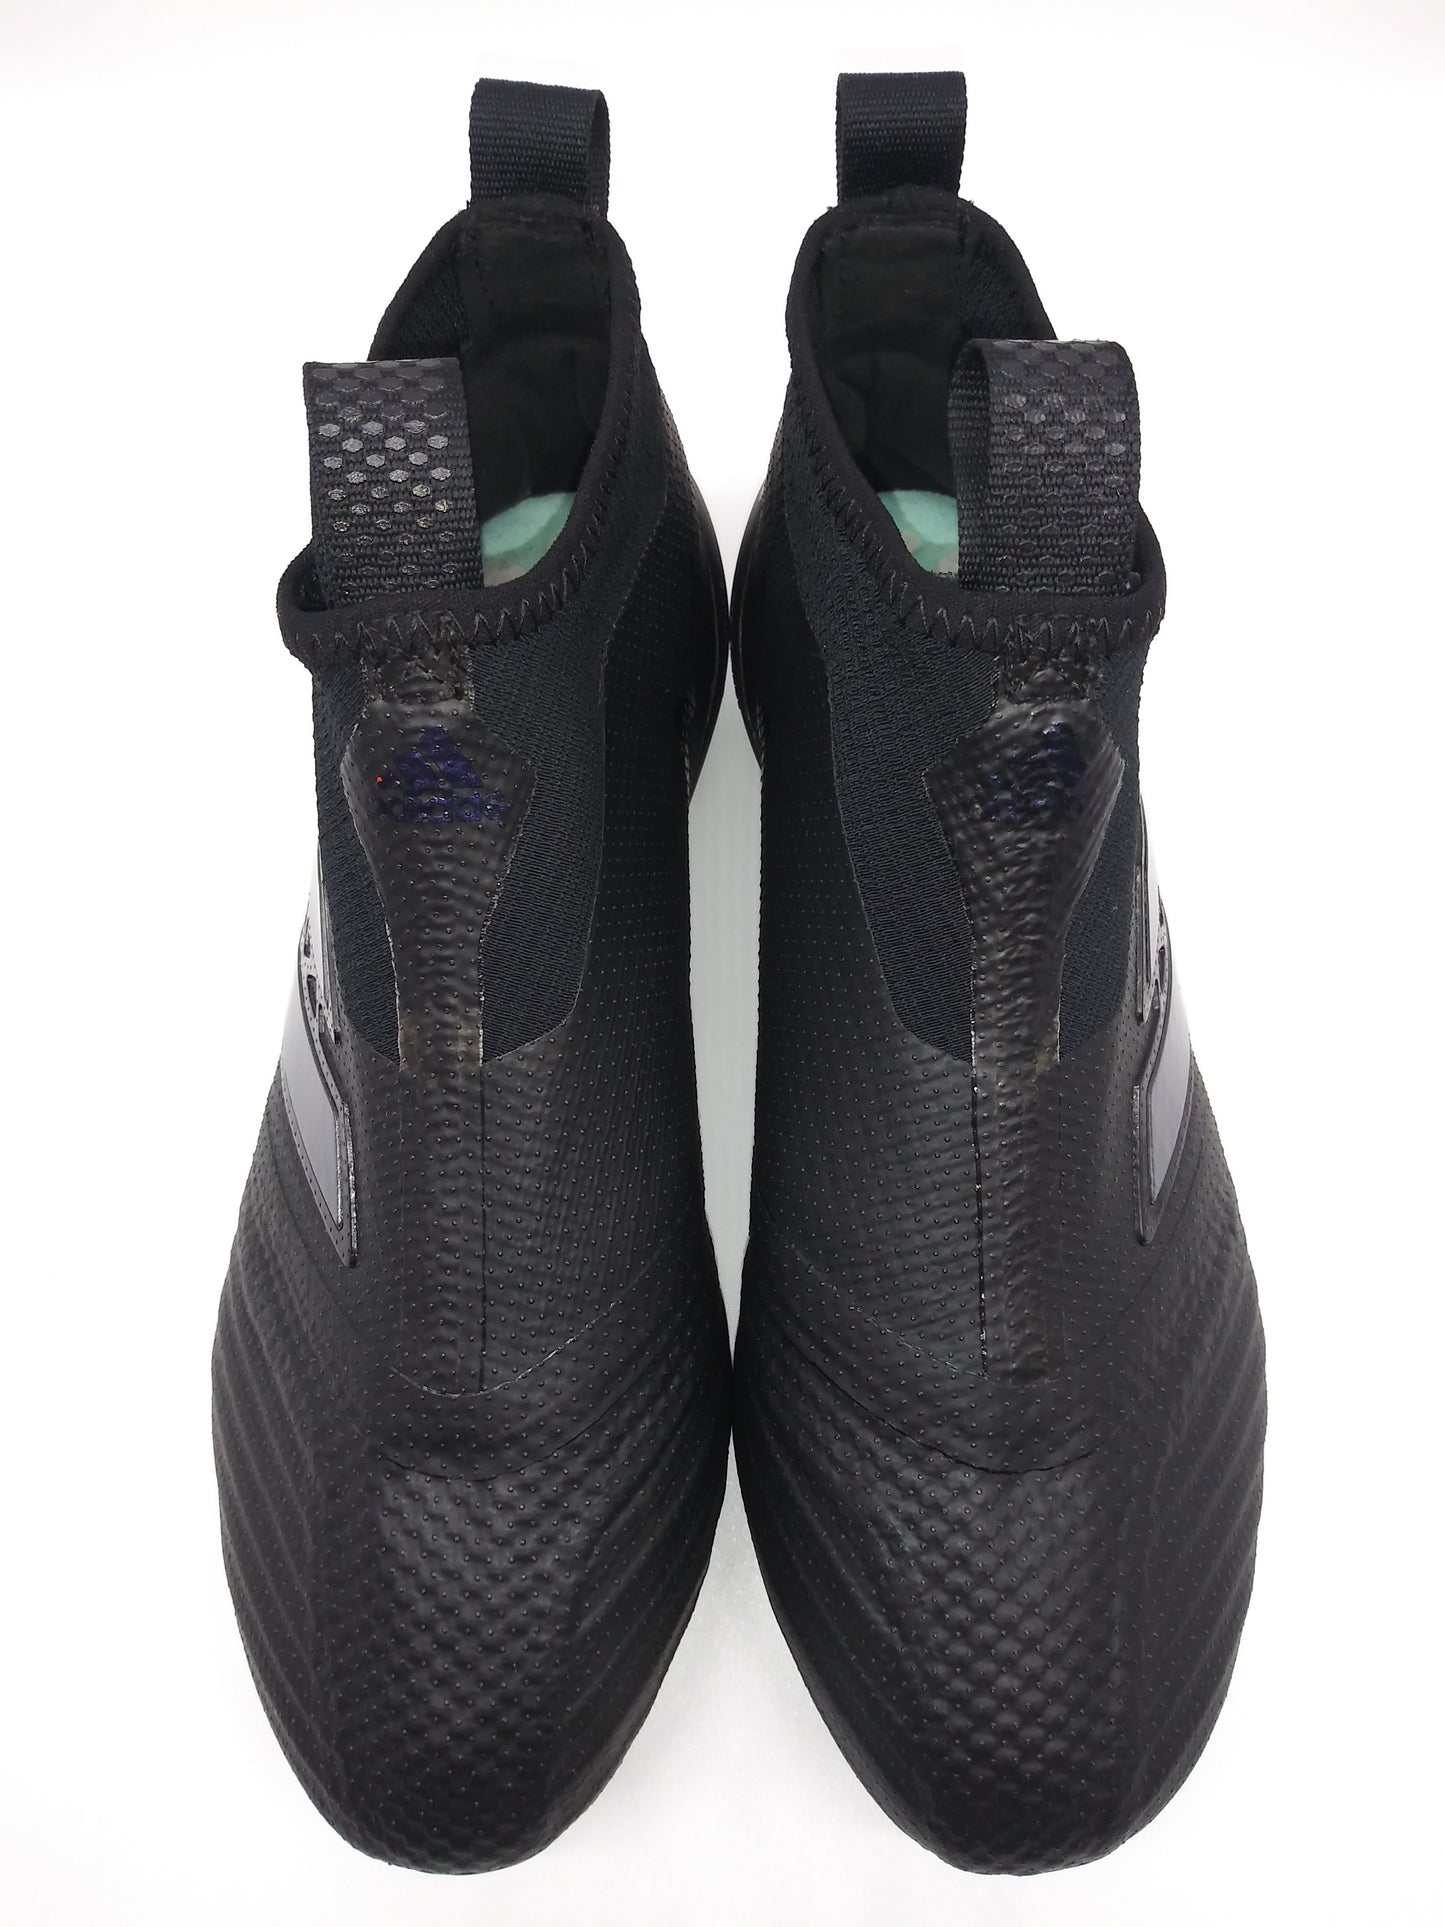 Adidas ACE 17+ Purcontrol FG Black Soccer Cleats